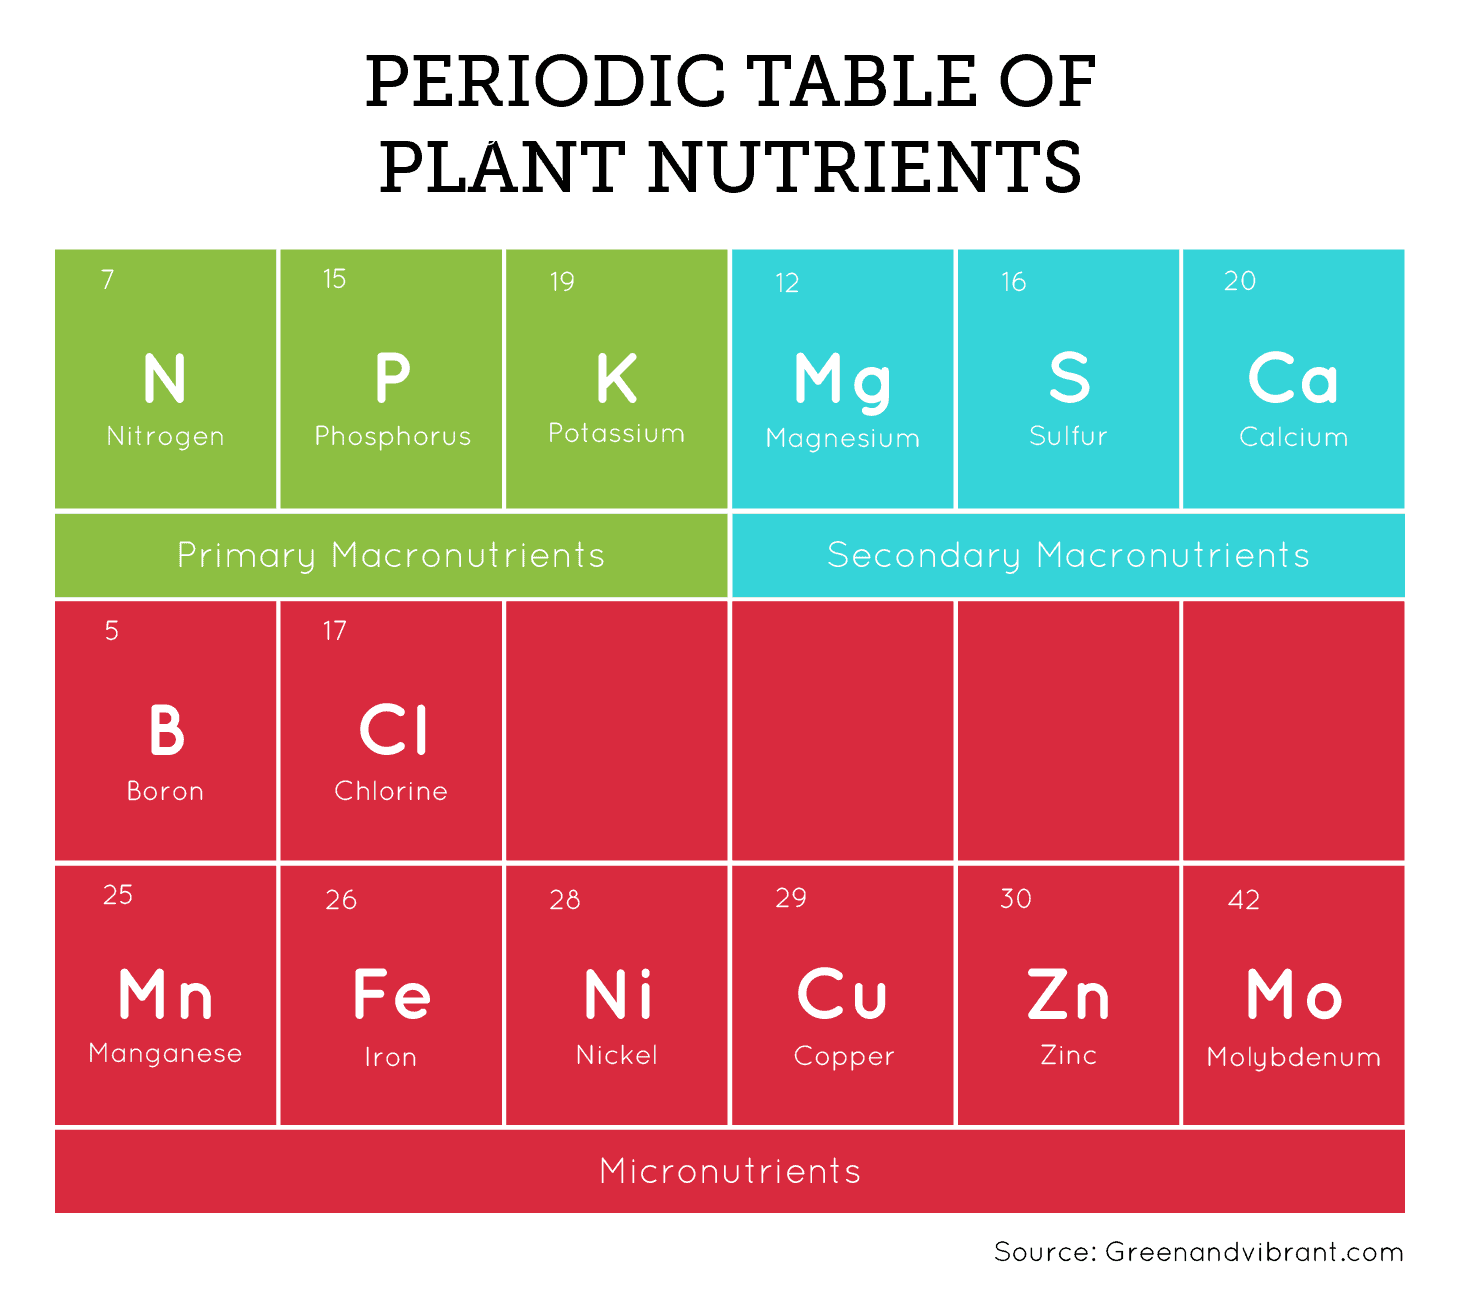 Hydro Nutrient Chart